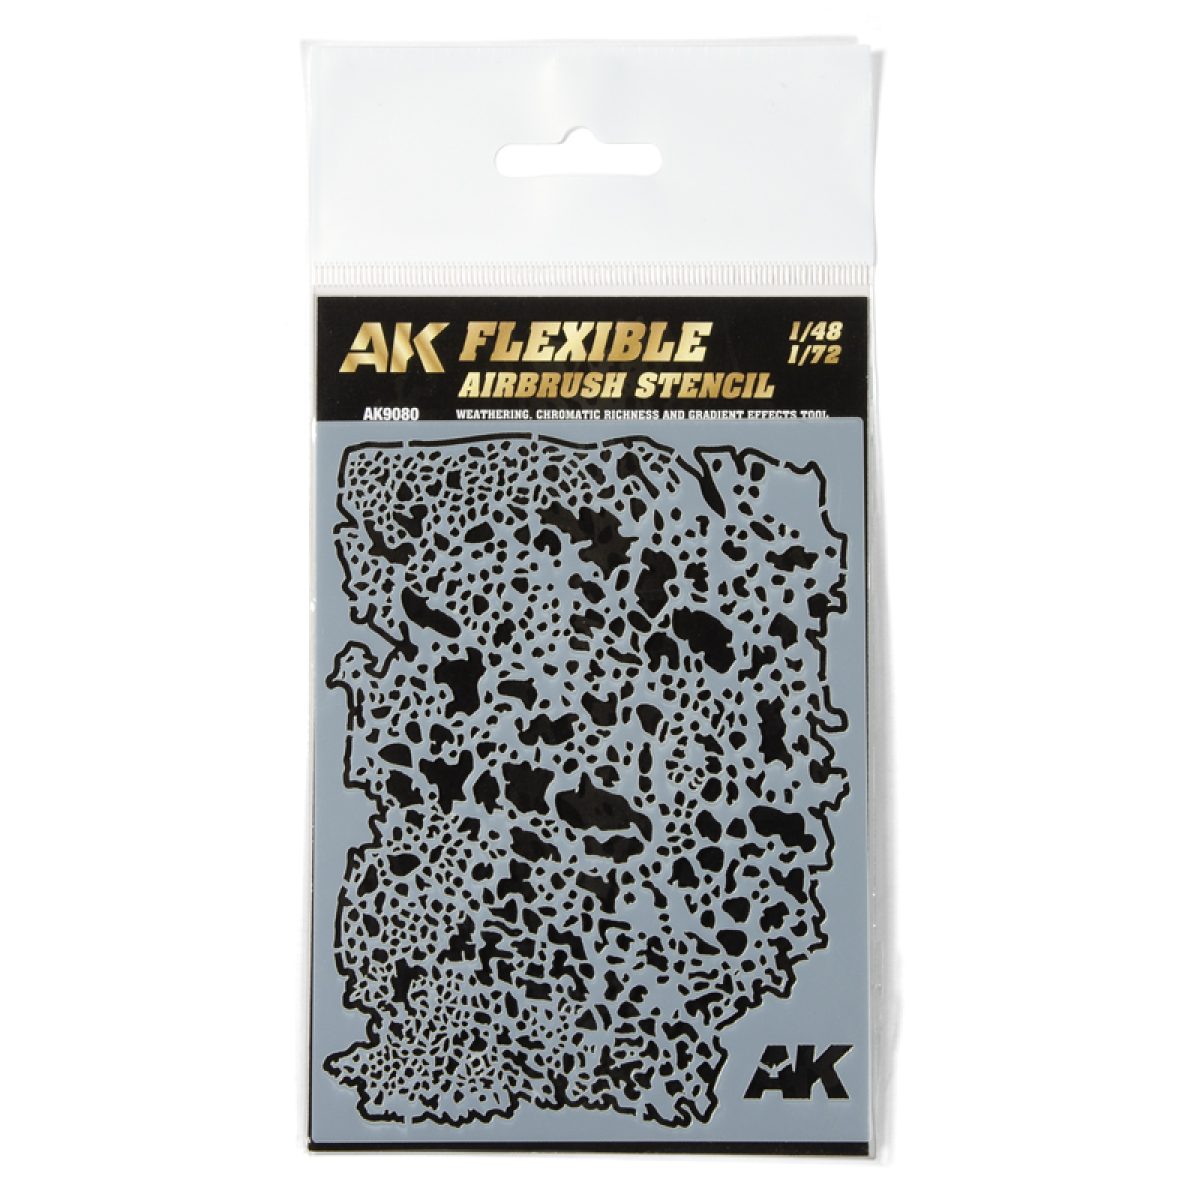 AEROSPACE Airbrush Stencils - Alien Skins ALS1 — Midwest Airbrush Supply Co